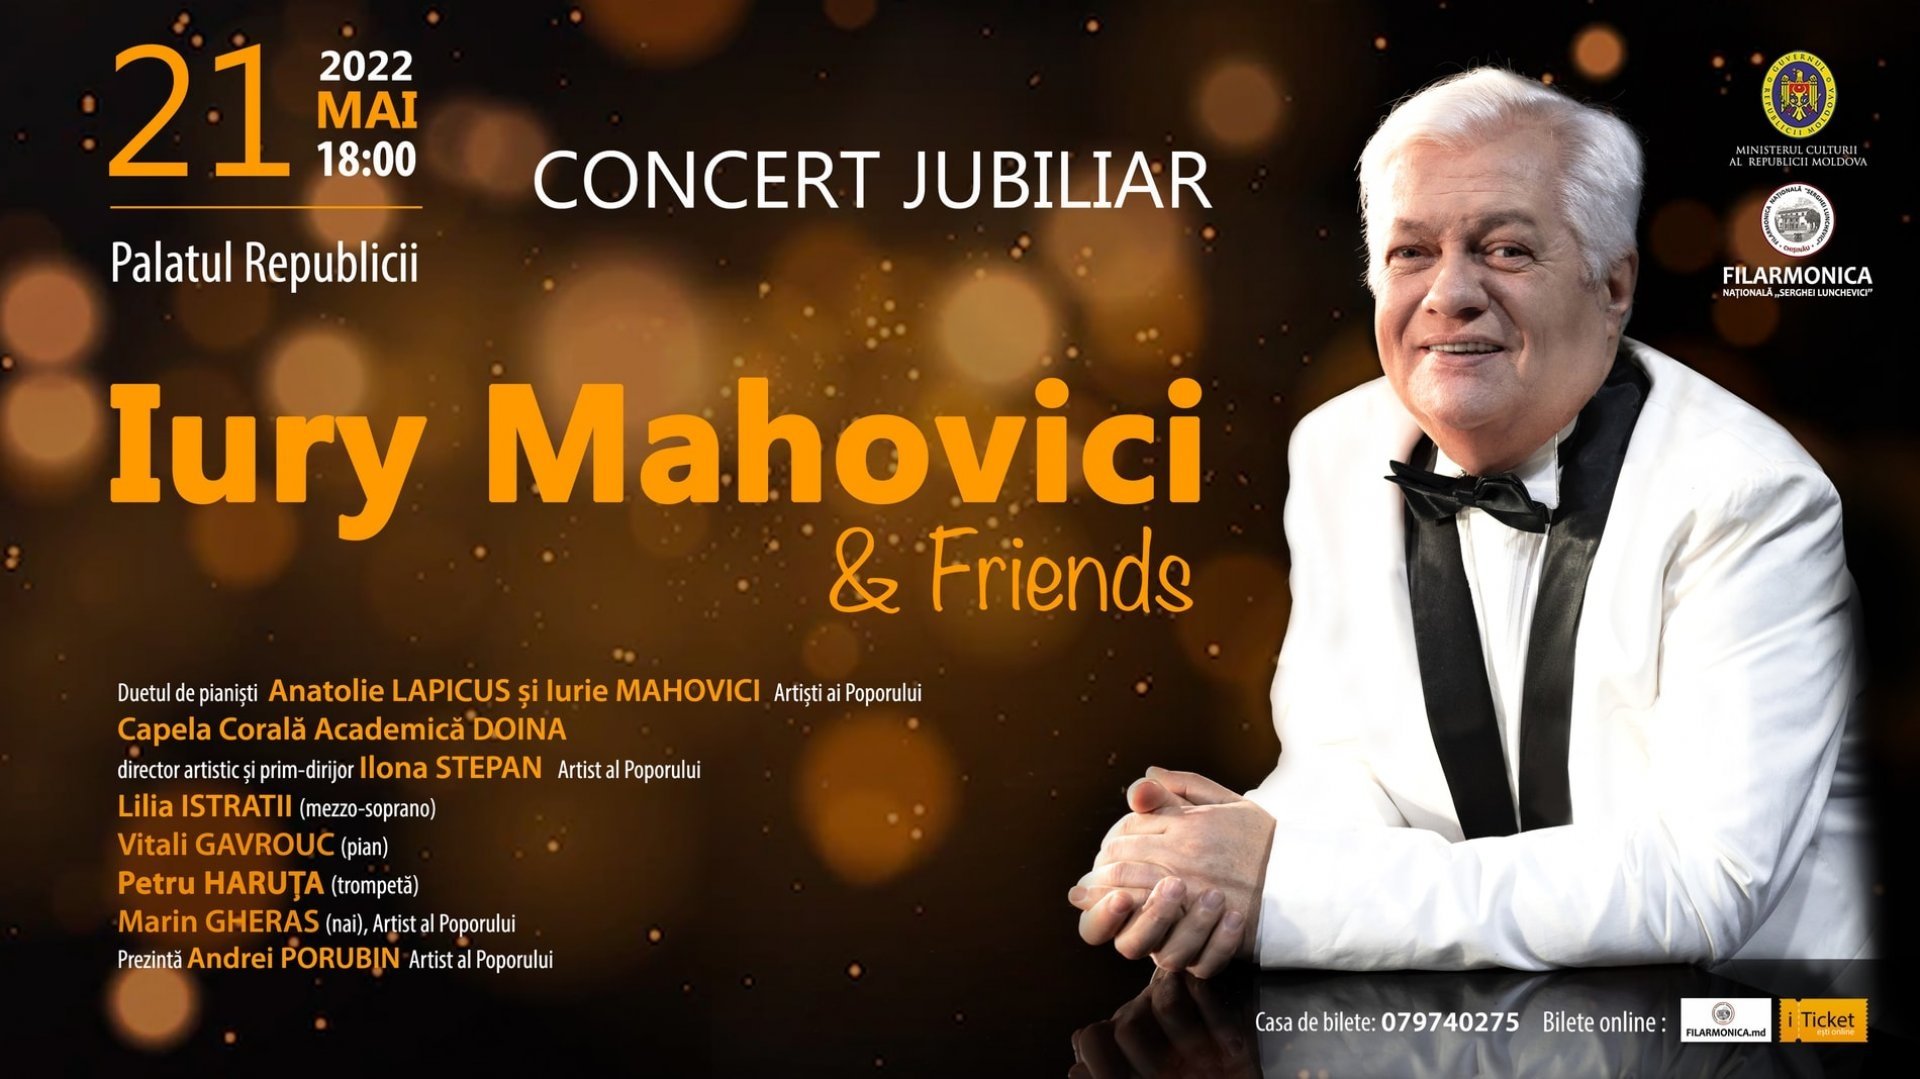 Concert Jubiliar - Iury Mahovici&Friends